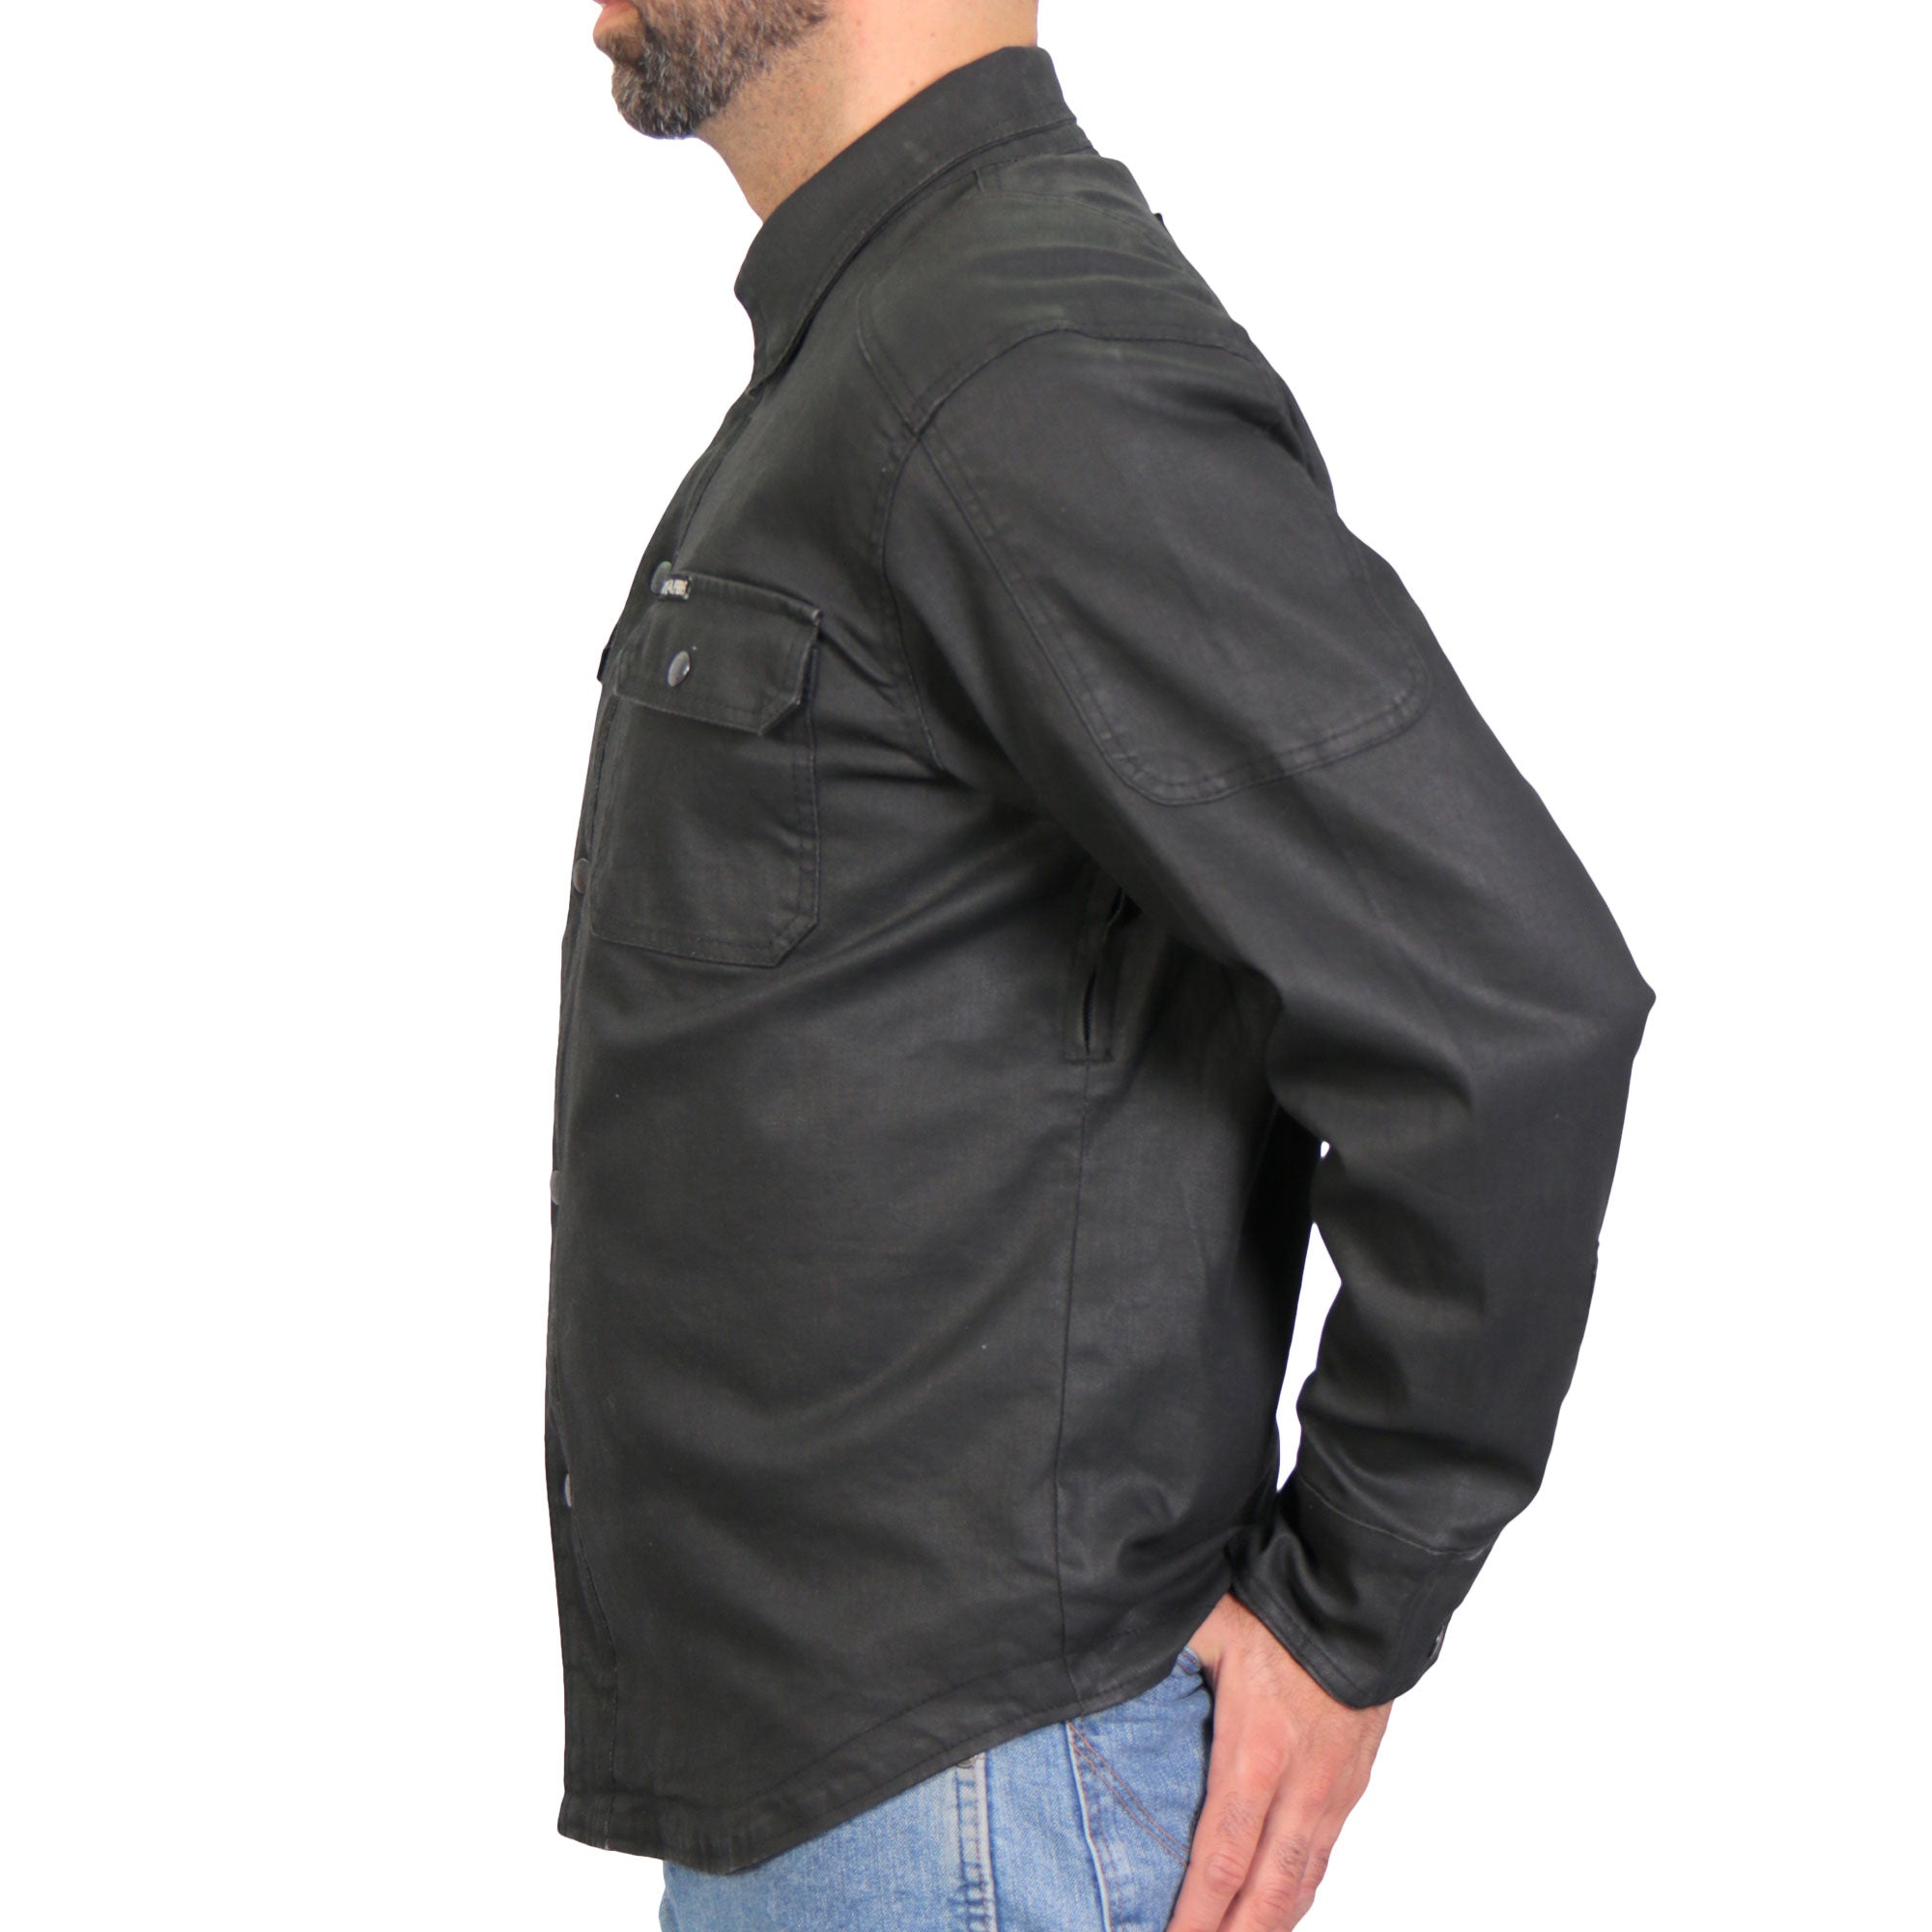 Men's Jackets - Leather, Waxed Canvas, Denim & More - Thursday